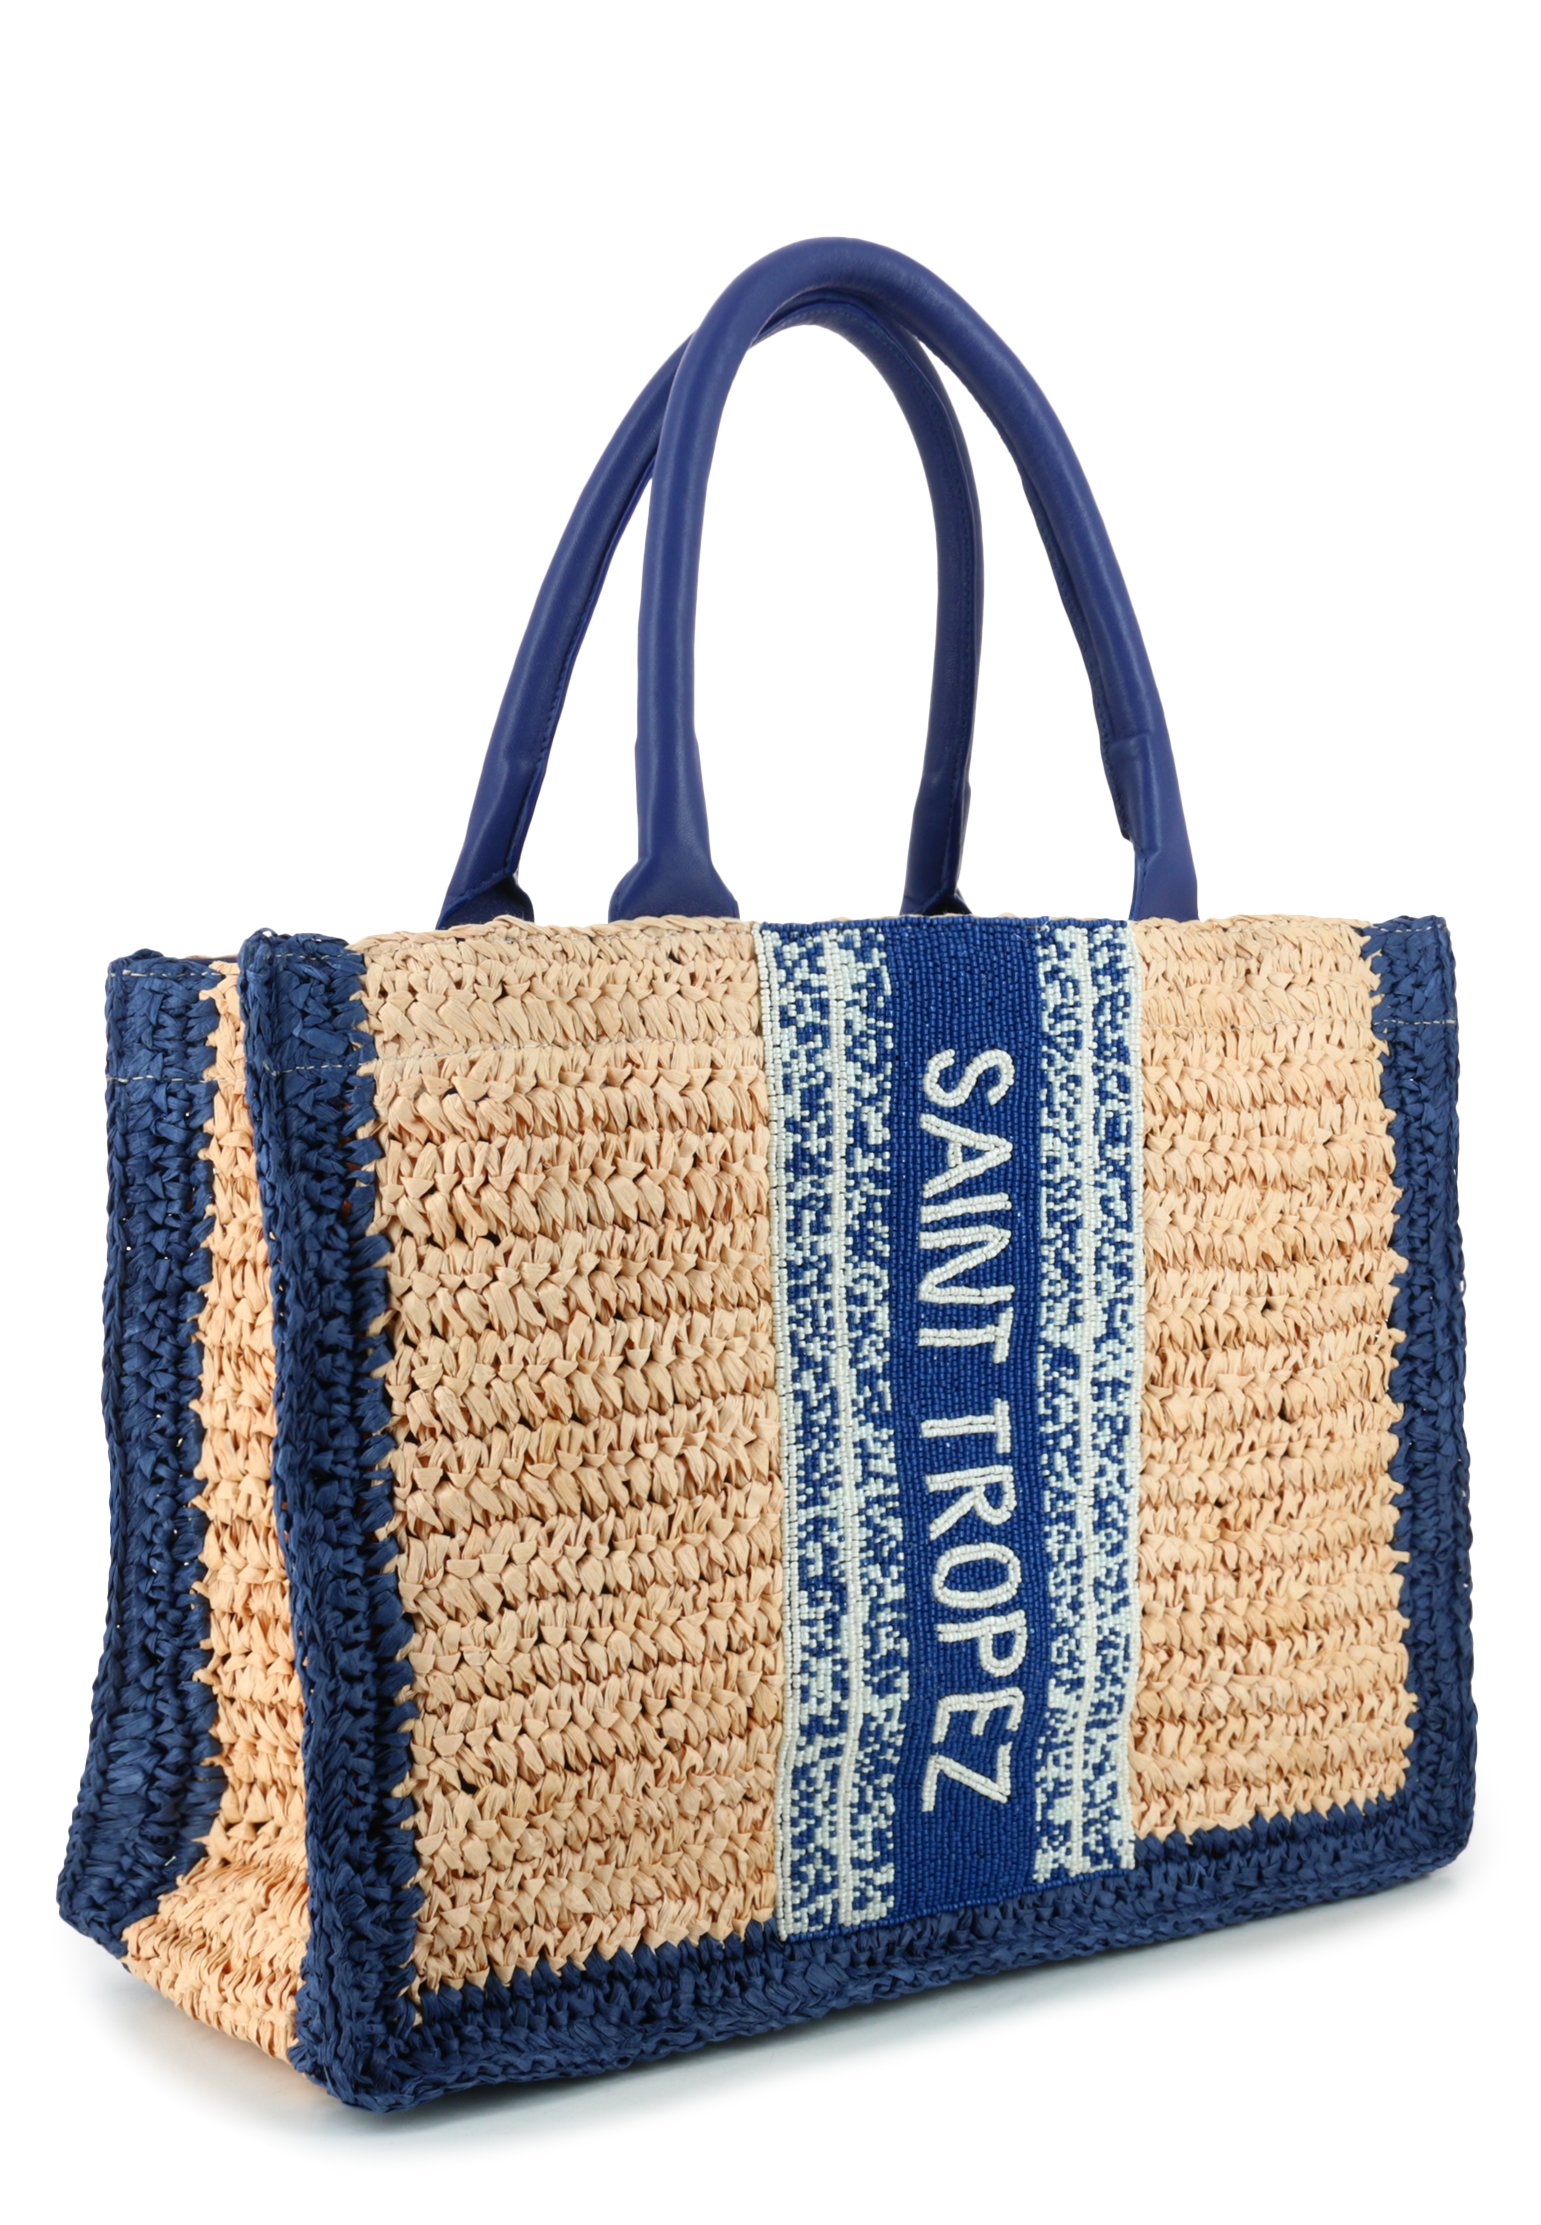 Bag DE SIENA Color: blue (Code: 2327) in online store Allure